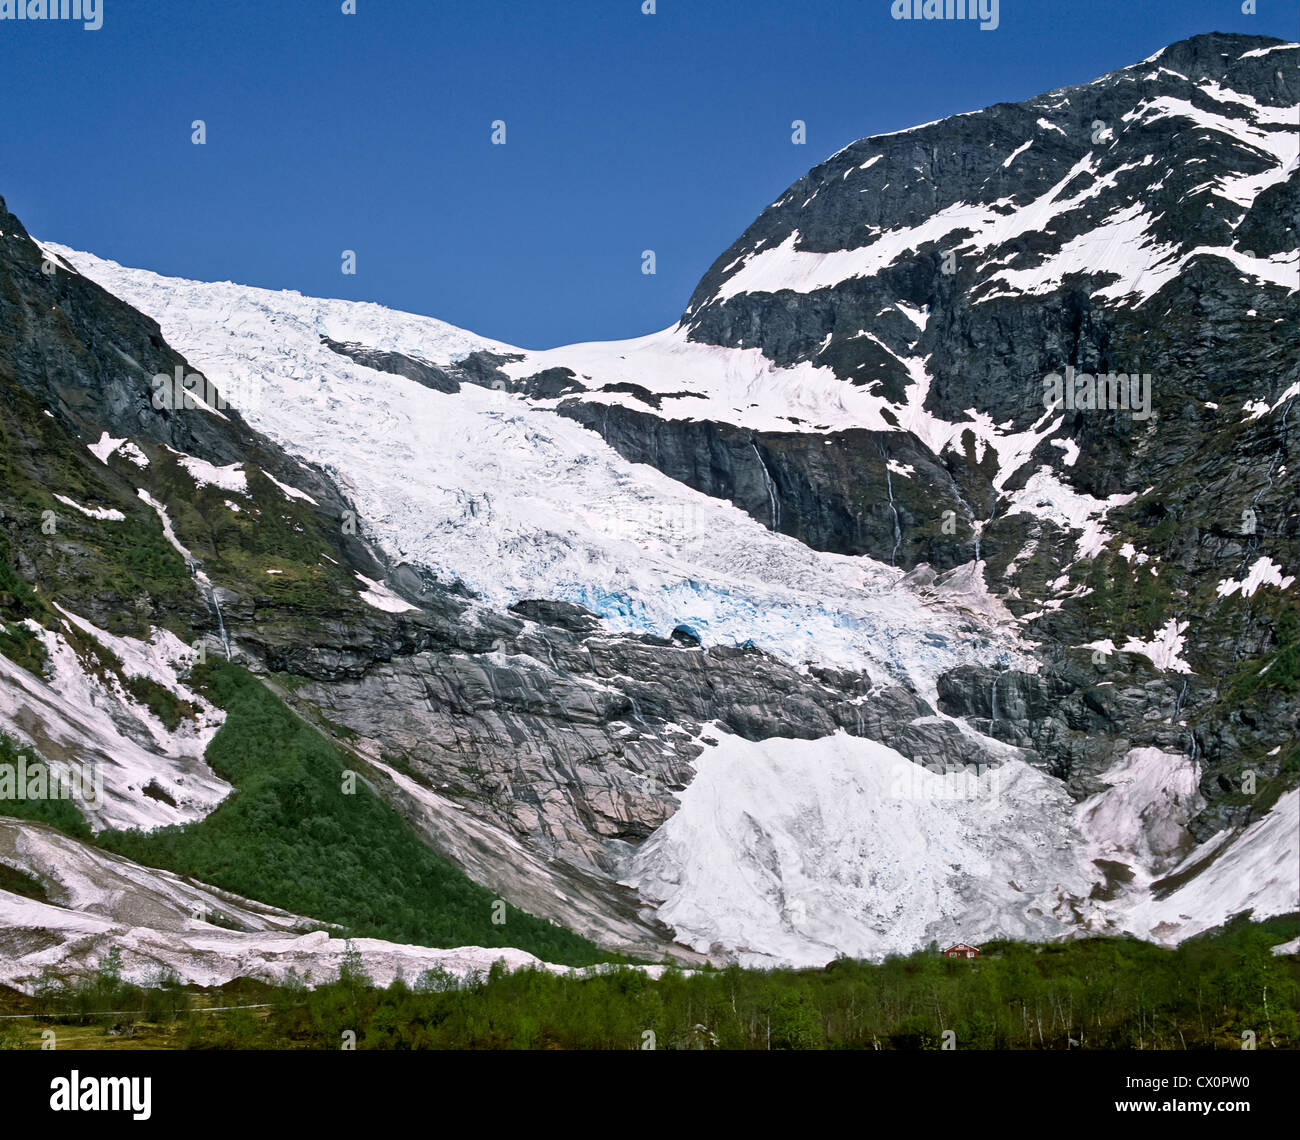 8274. The Boya Glacier, Norway, Europe Stock Photo - Alamy